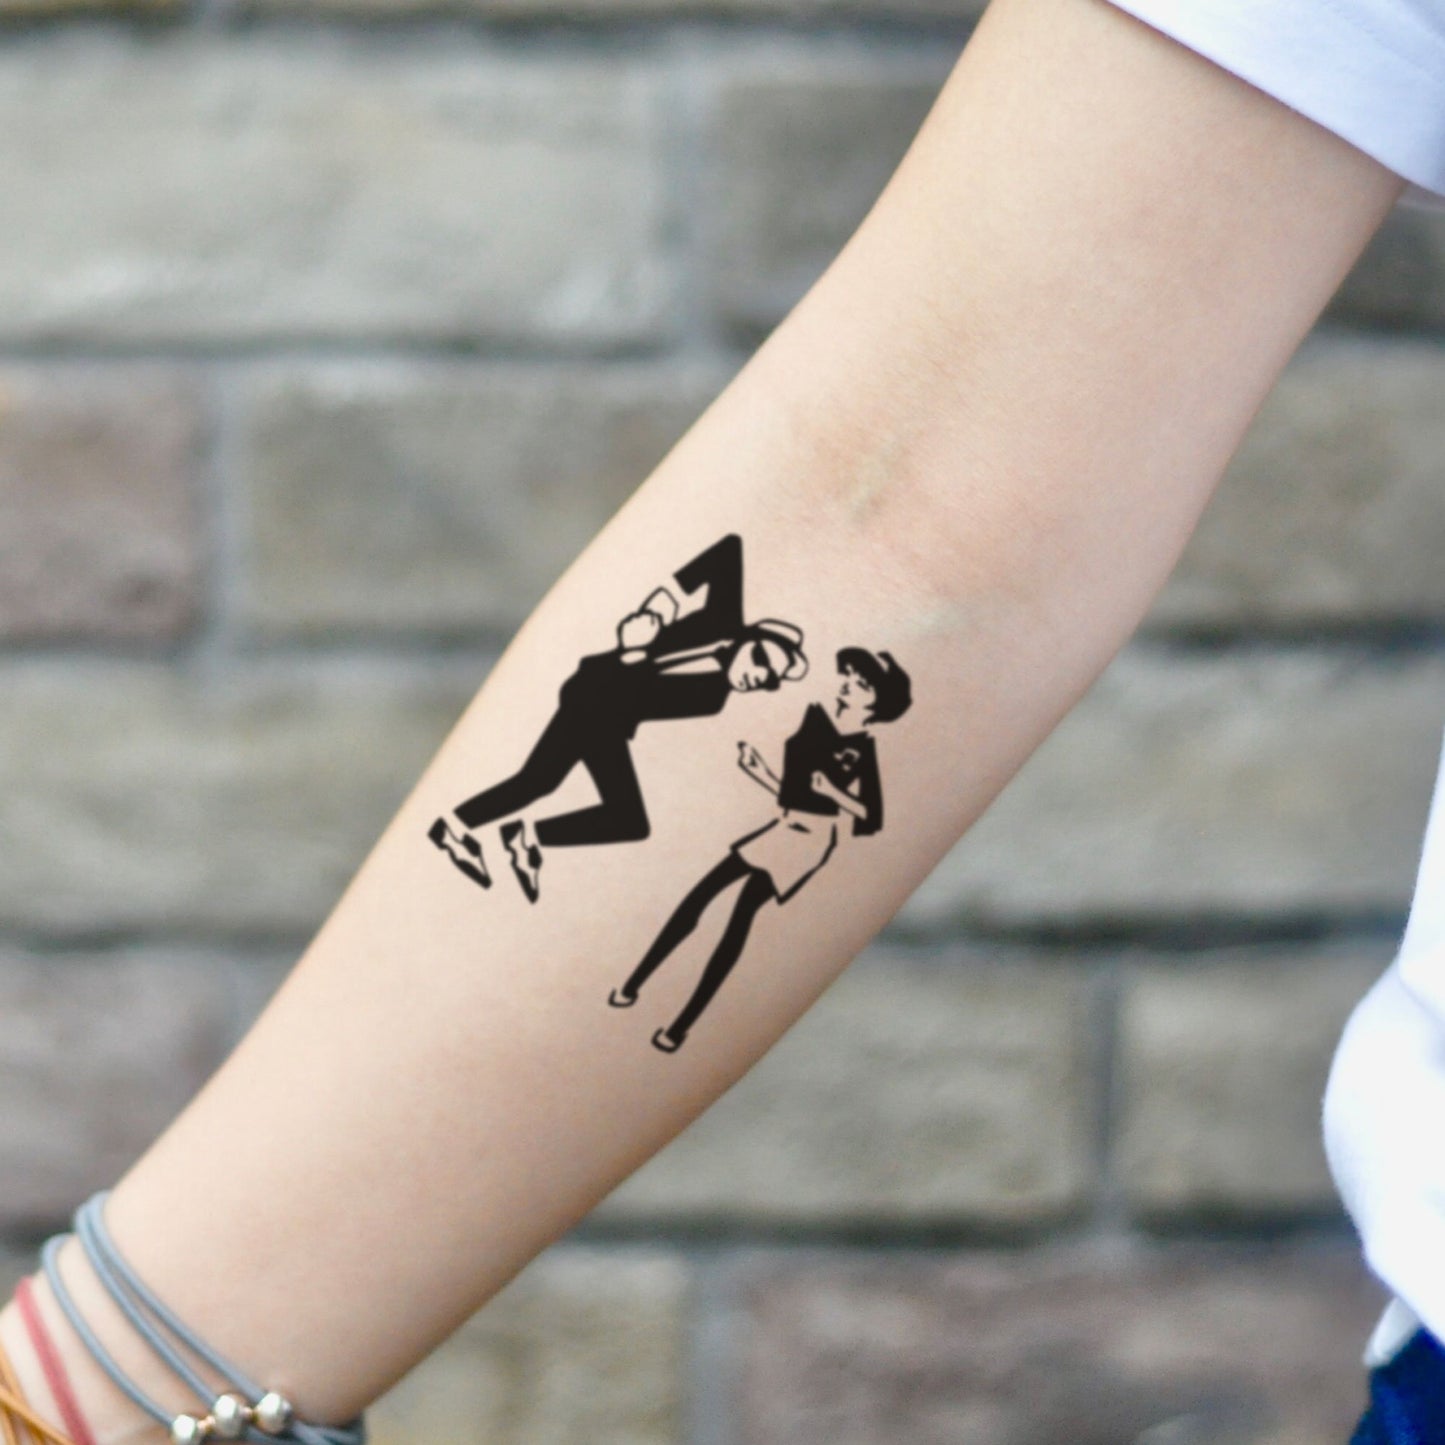 fake small ska rude boy two tone illustrative temporary tattoo sticker design idea on inner arm